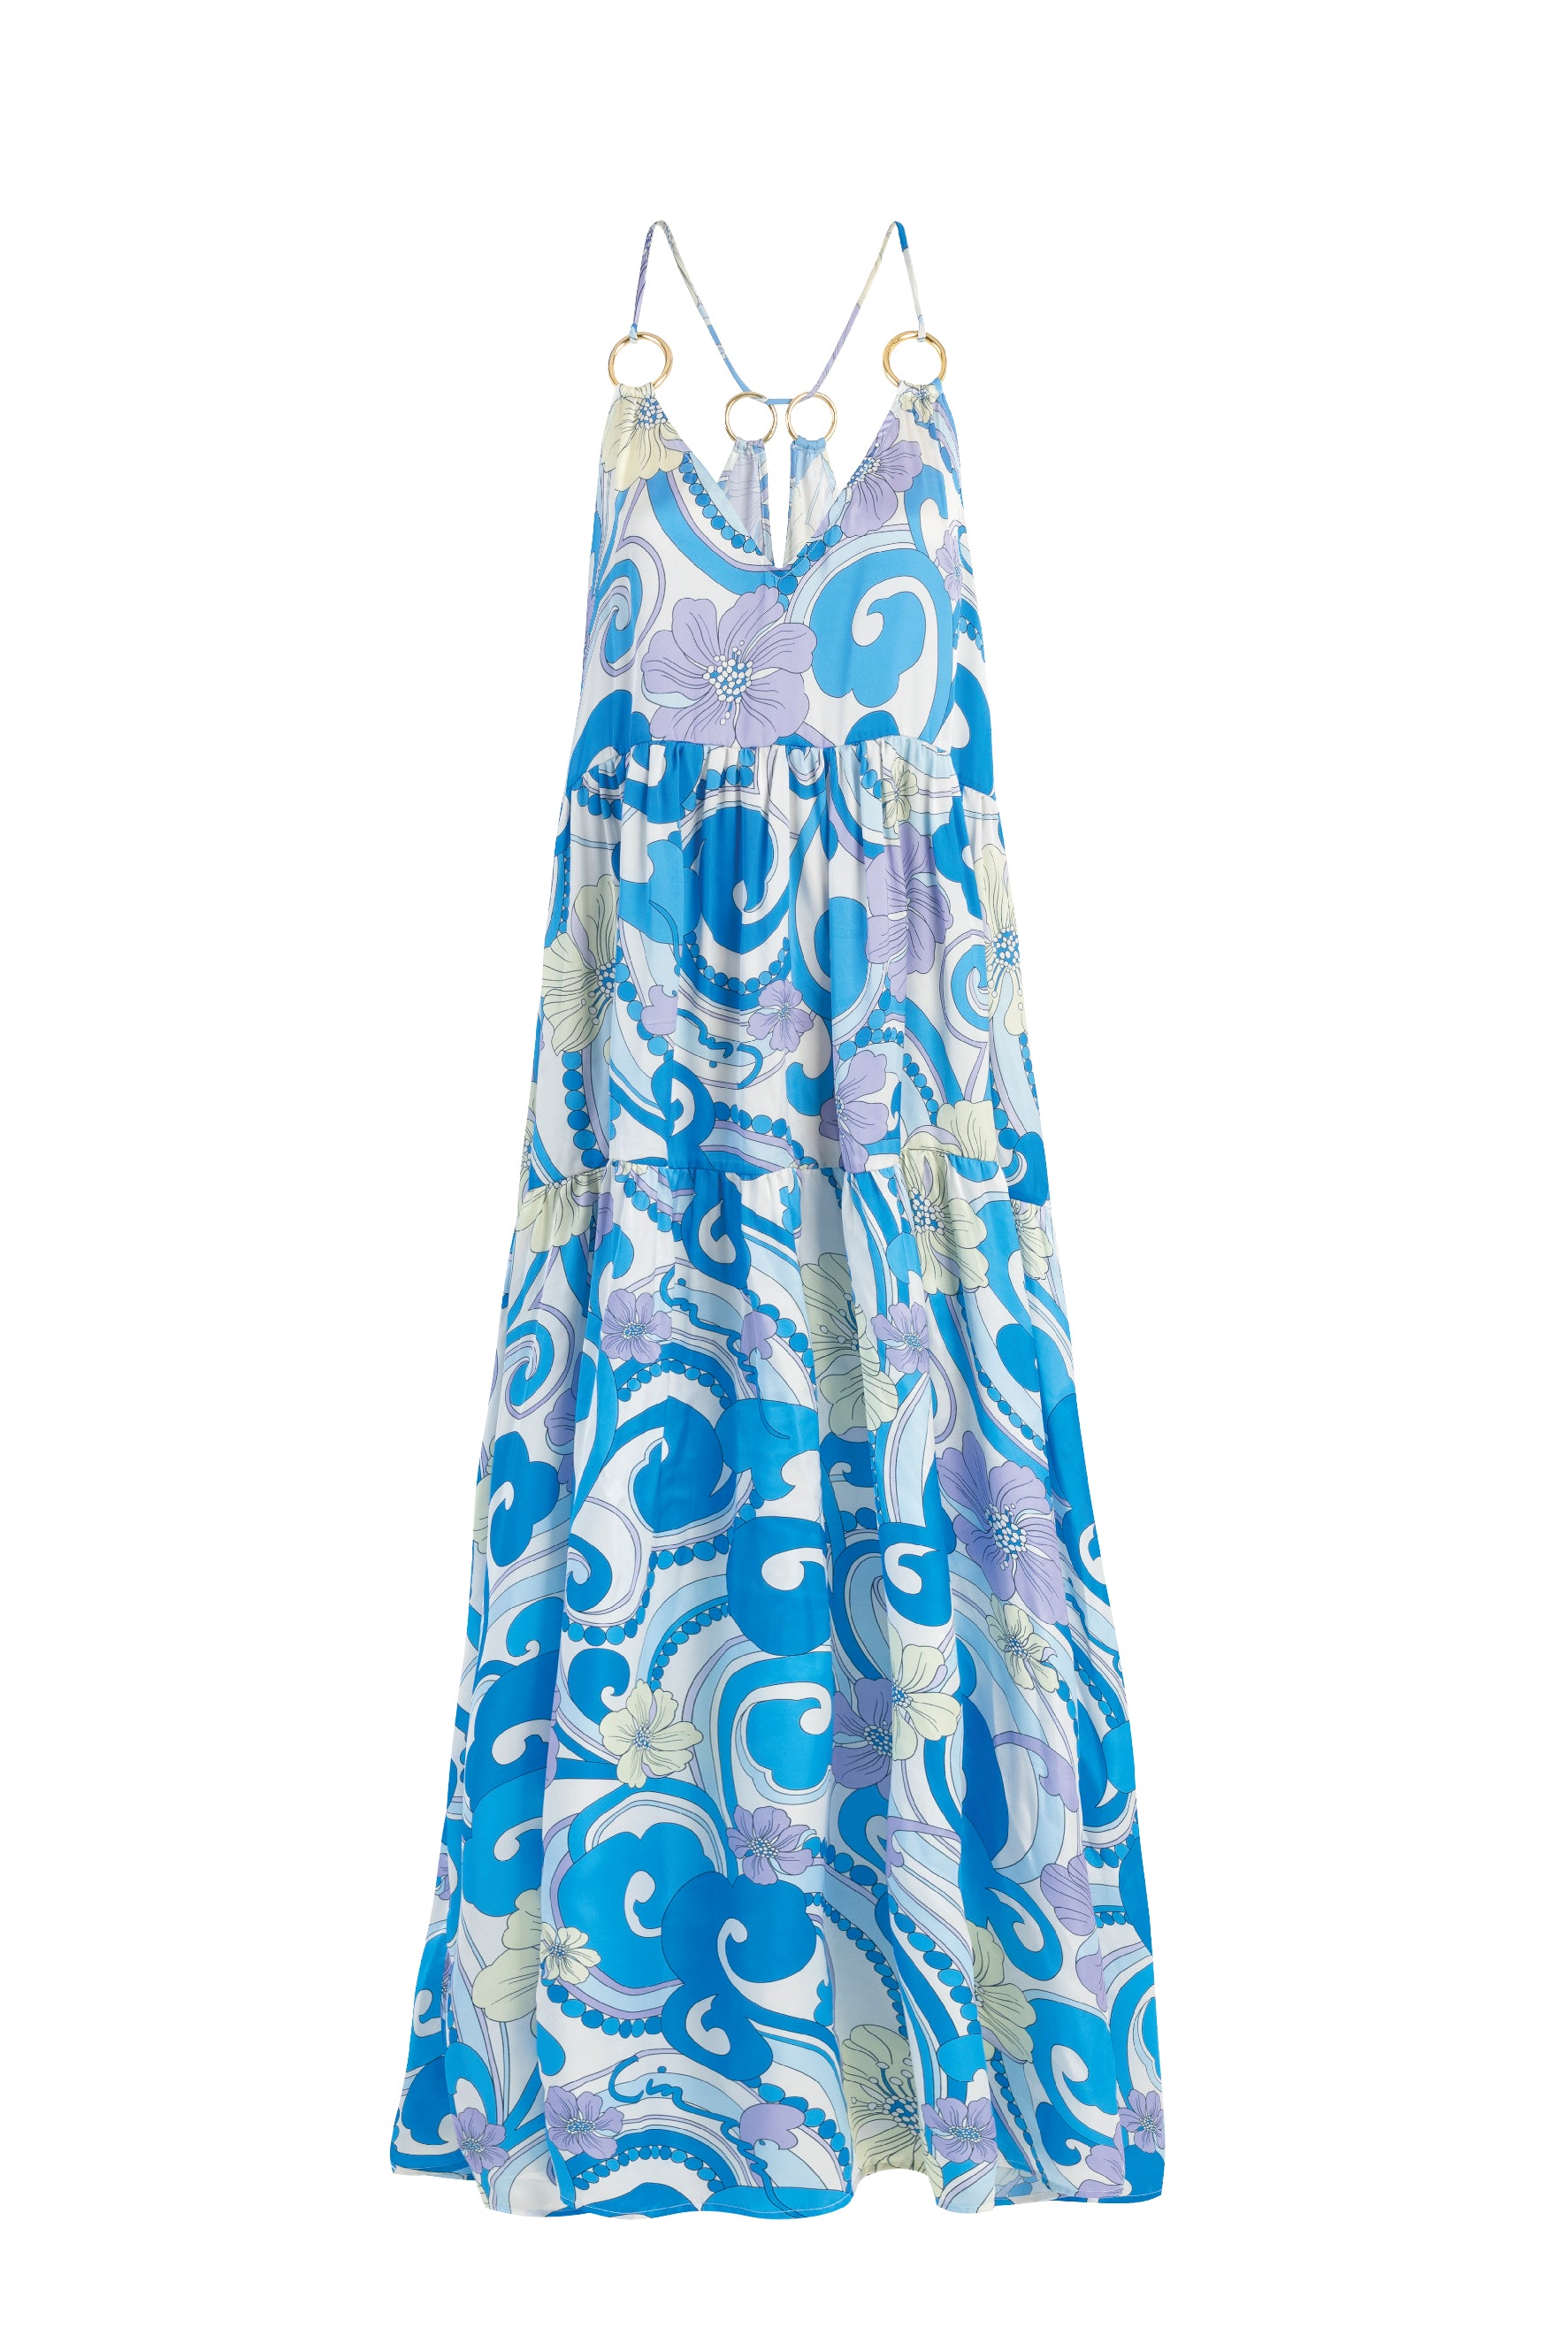 'Anemone' Dress - Ocean